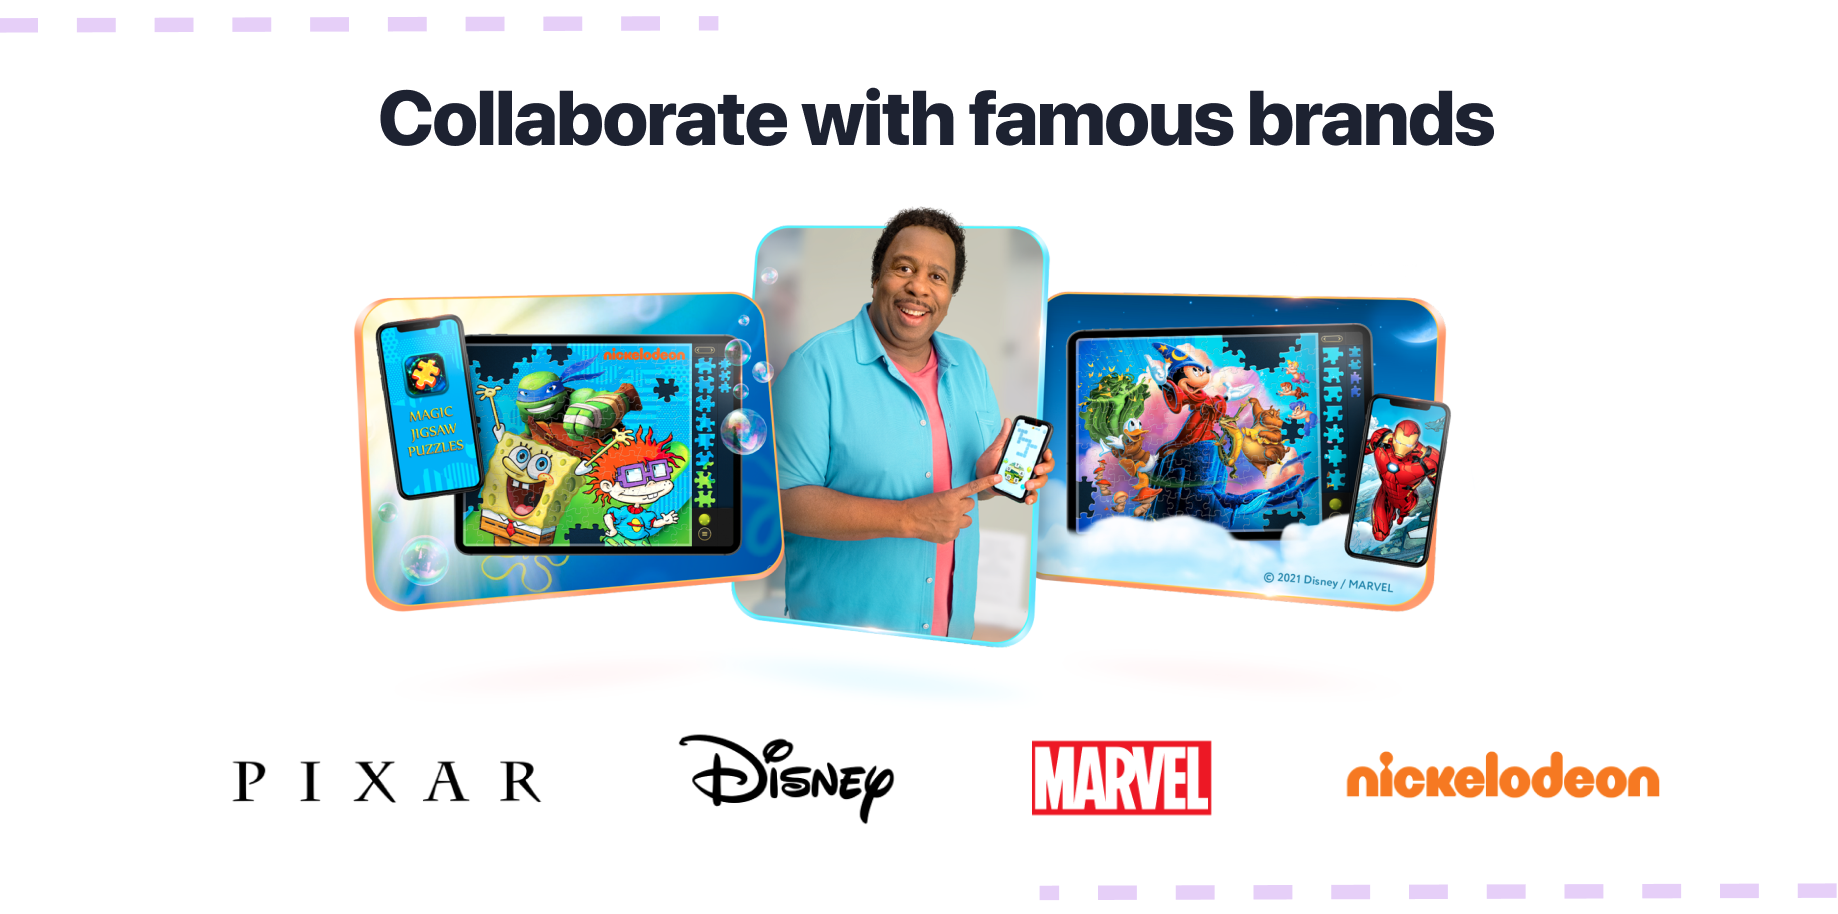 Get Cartoon Network - Microsoft Store